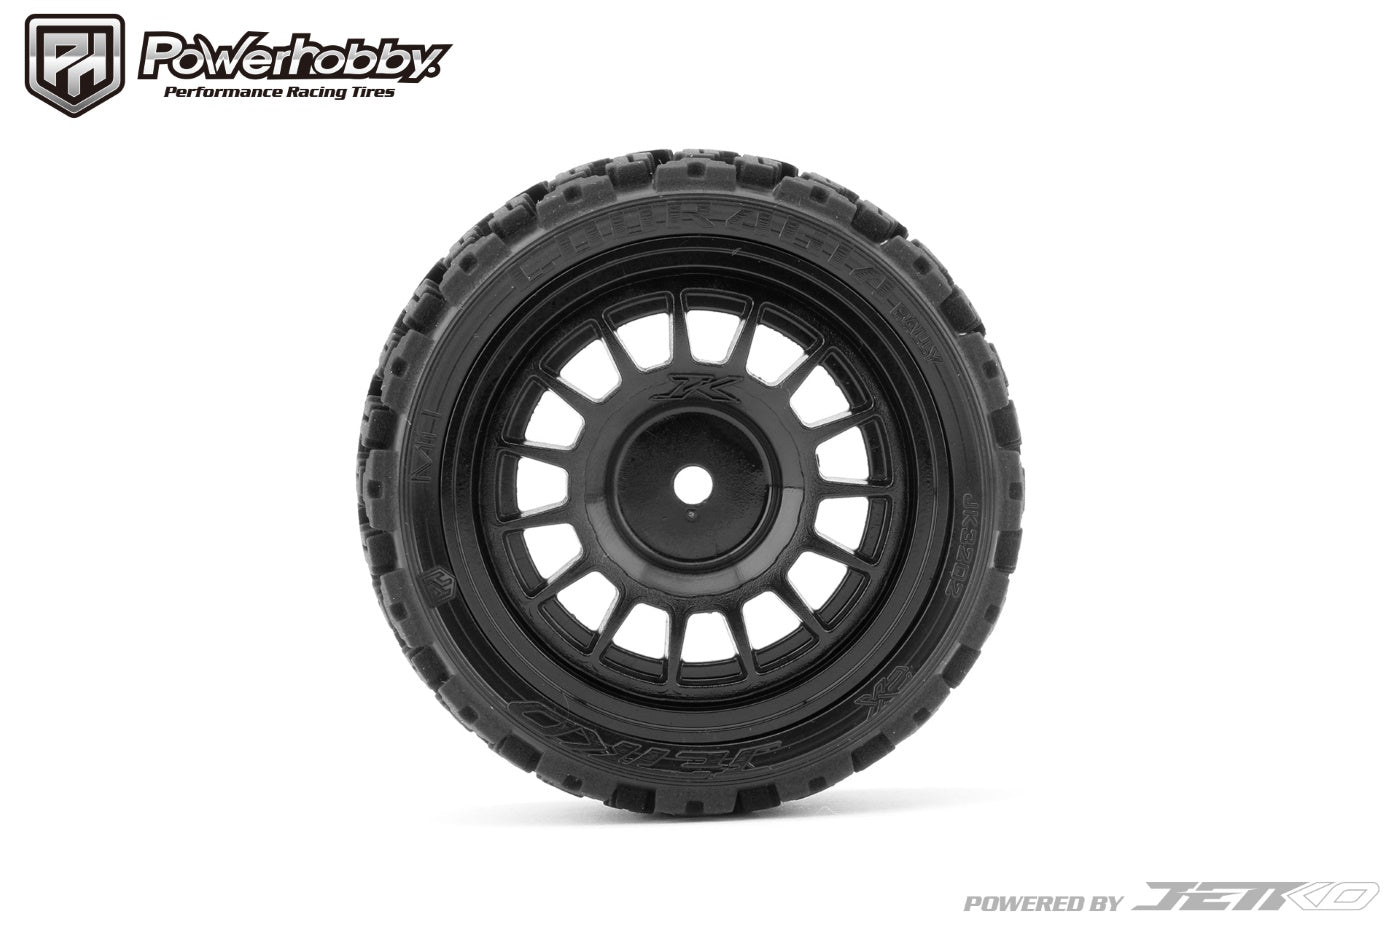 Powerhobby 1/10 Rally Car Couragia Mounted Tires Claw Wheels (4) - PowerHobby